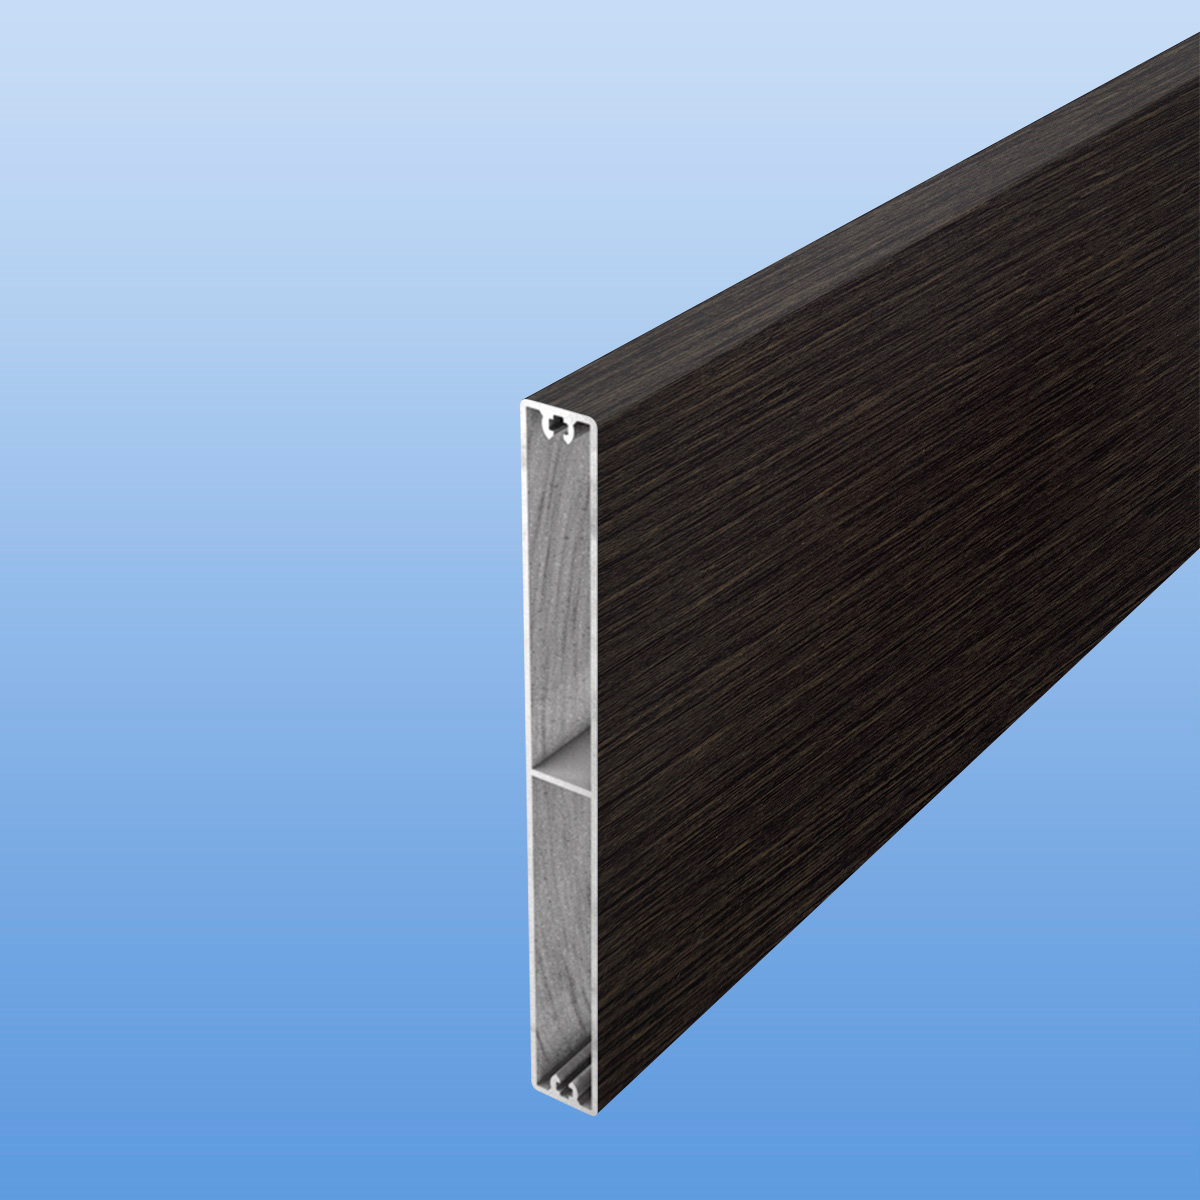 Balkonbretter aus Aluminium 150 mm breit in Holzoptik "Wenge"